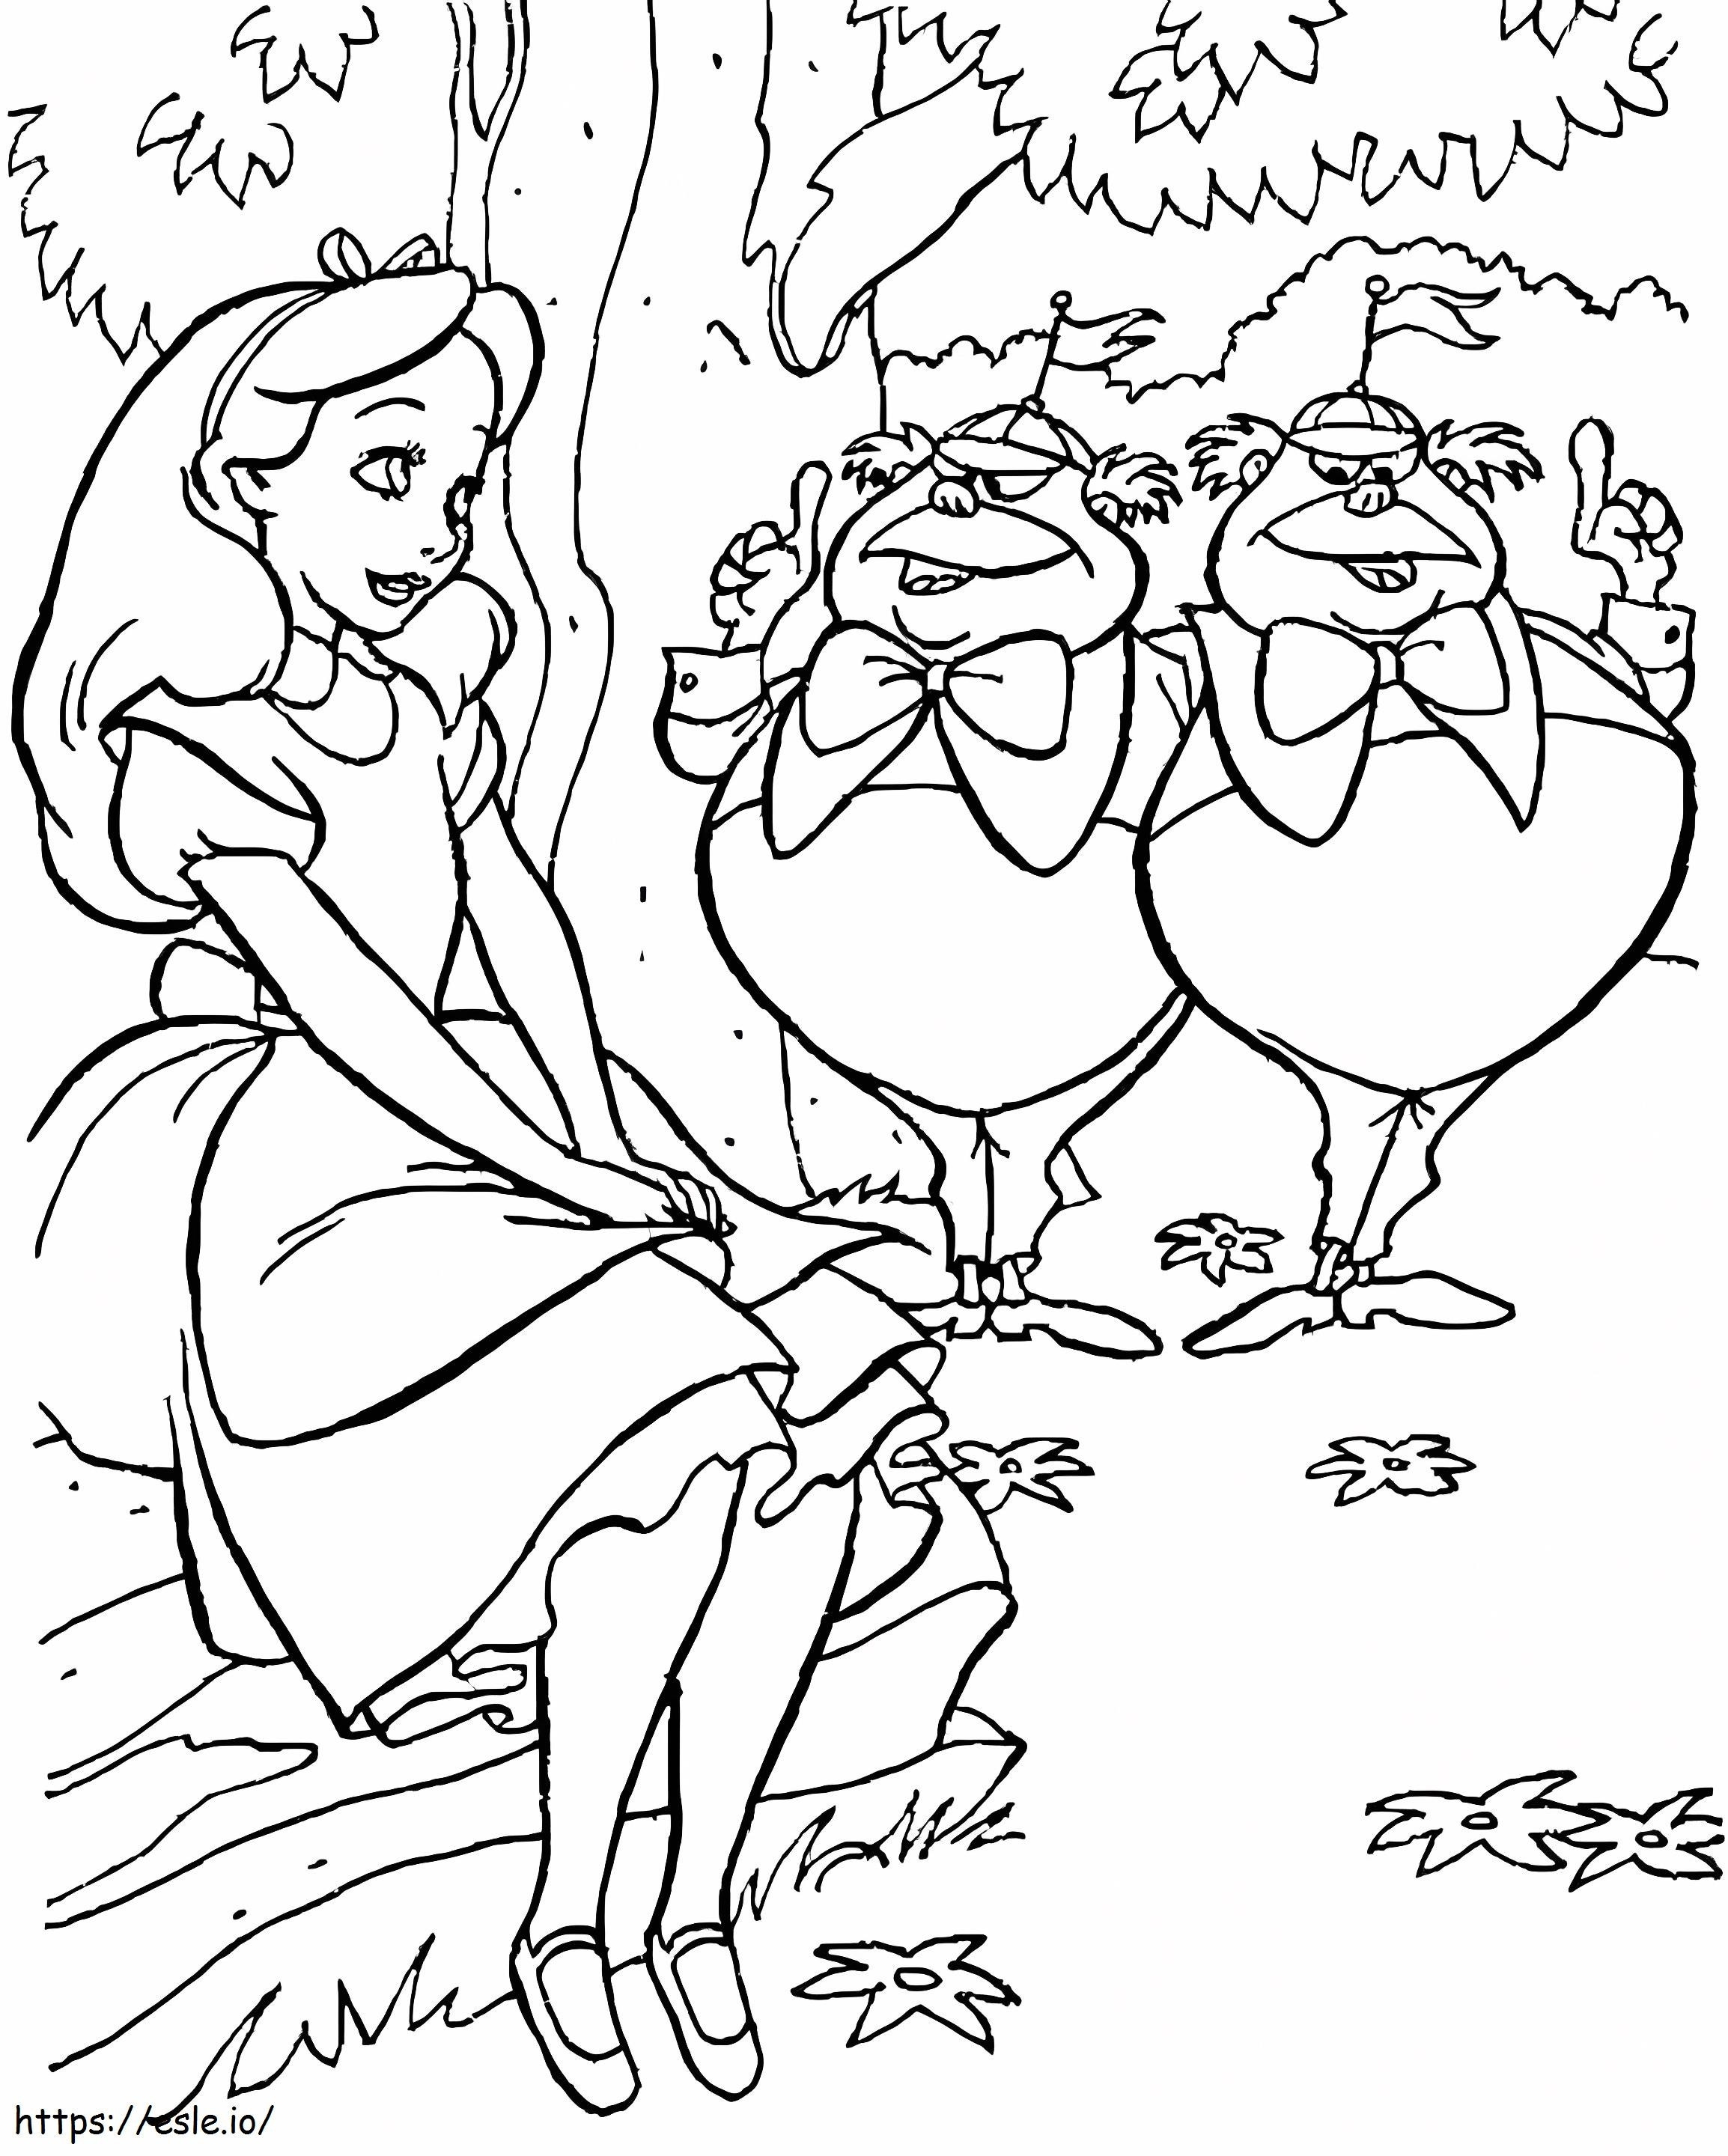 Alice With Tweedledum And Tweedledee coloring page